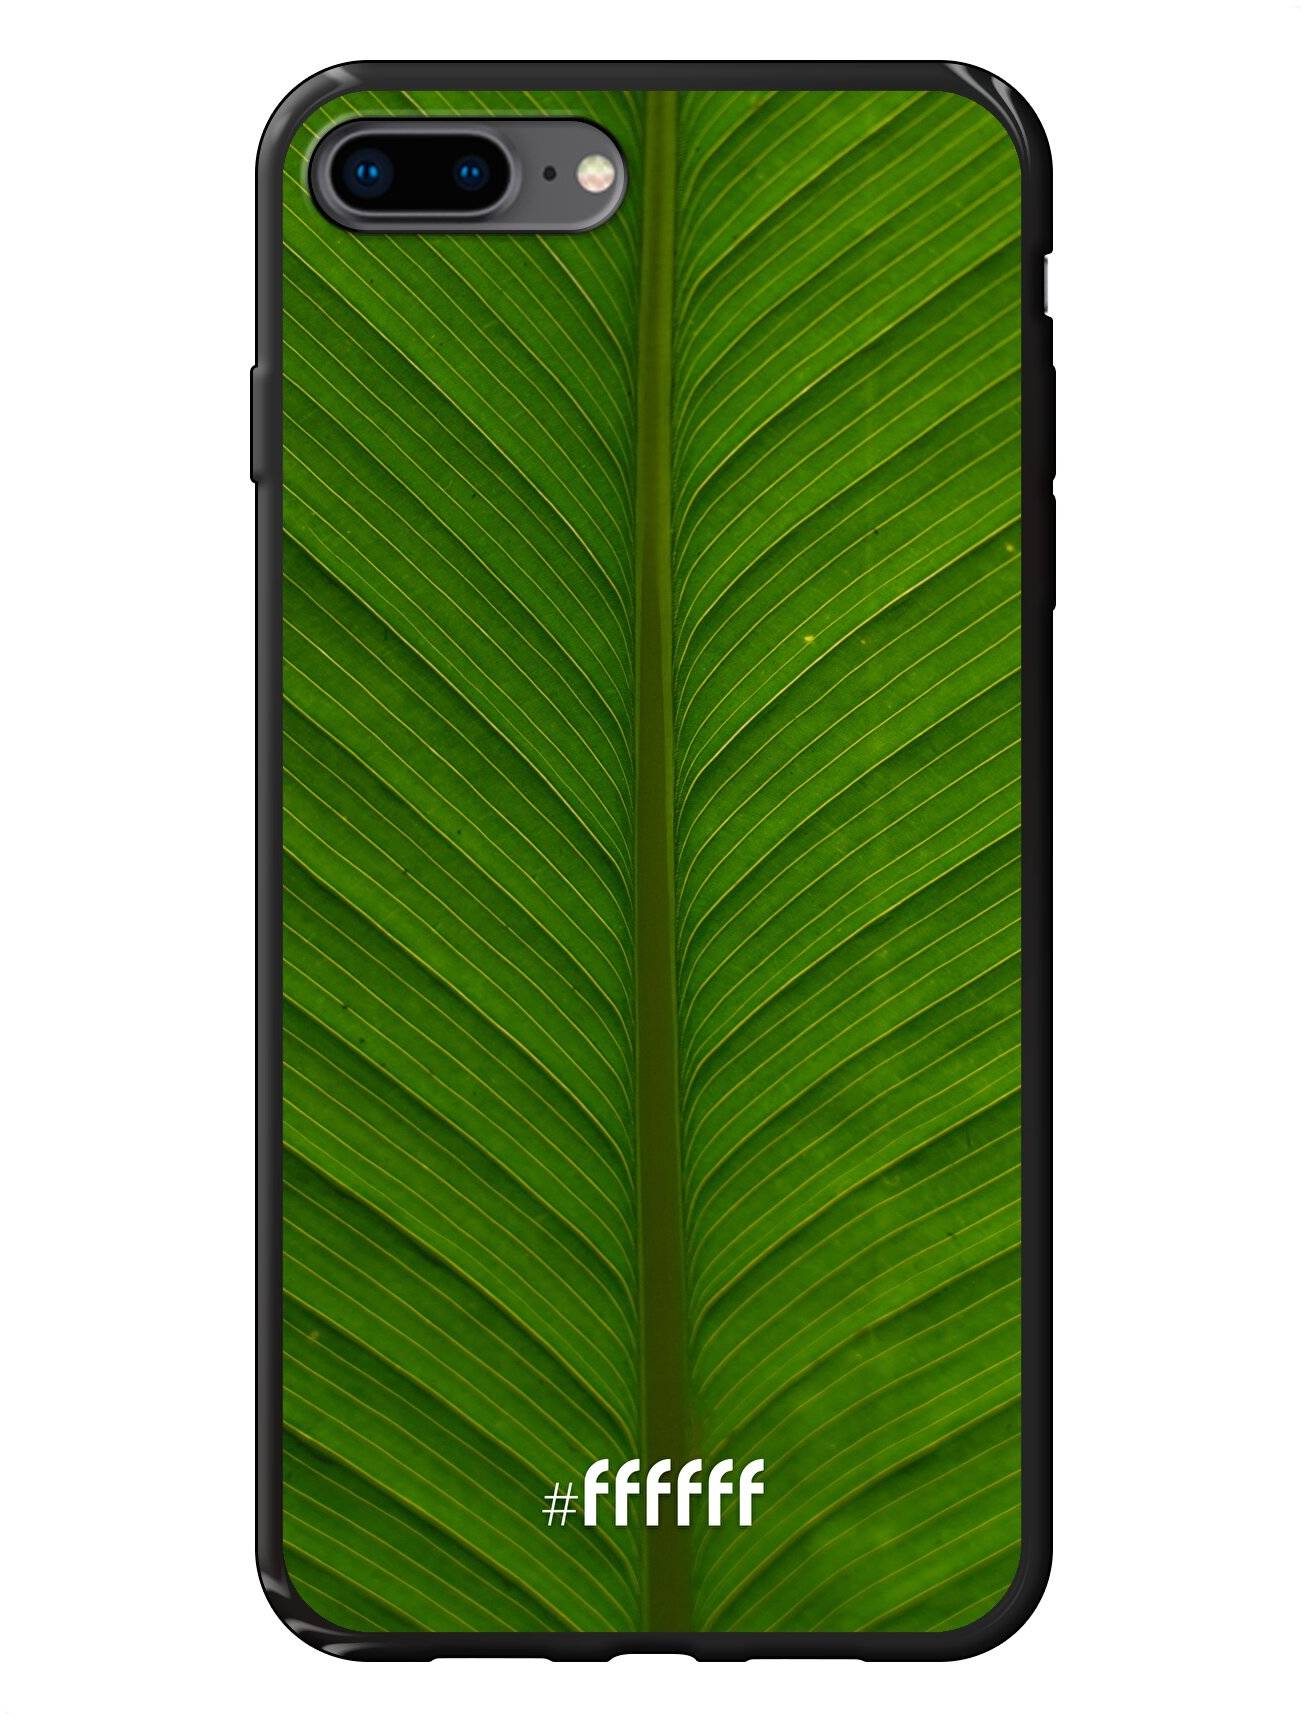 Unseen Green iPhone 8 Plus